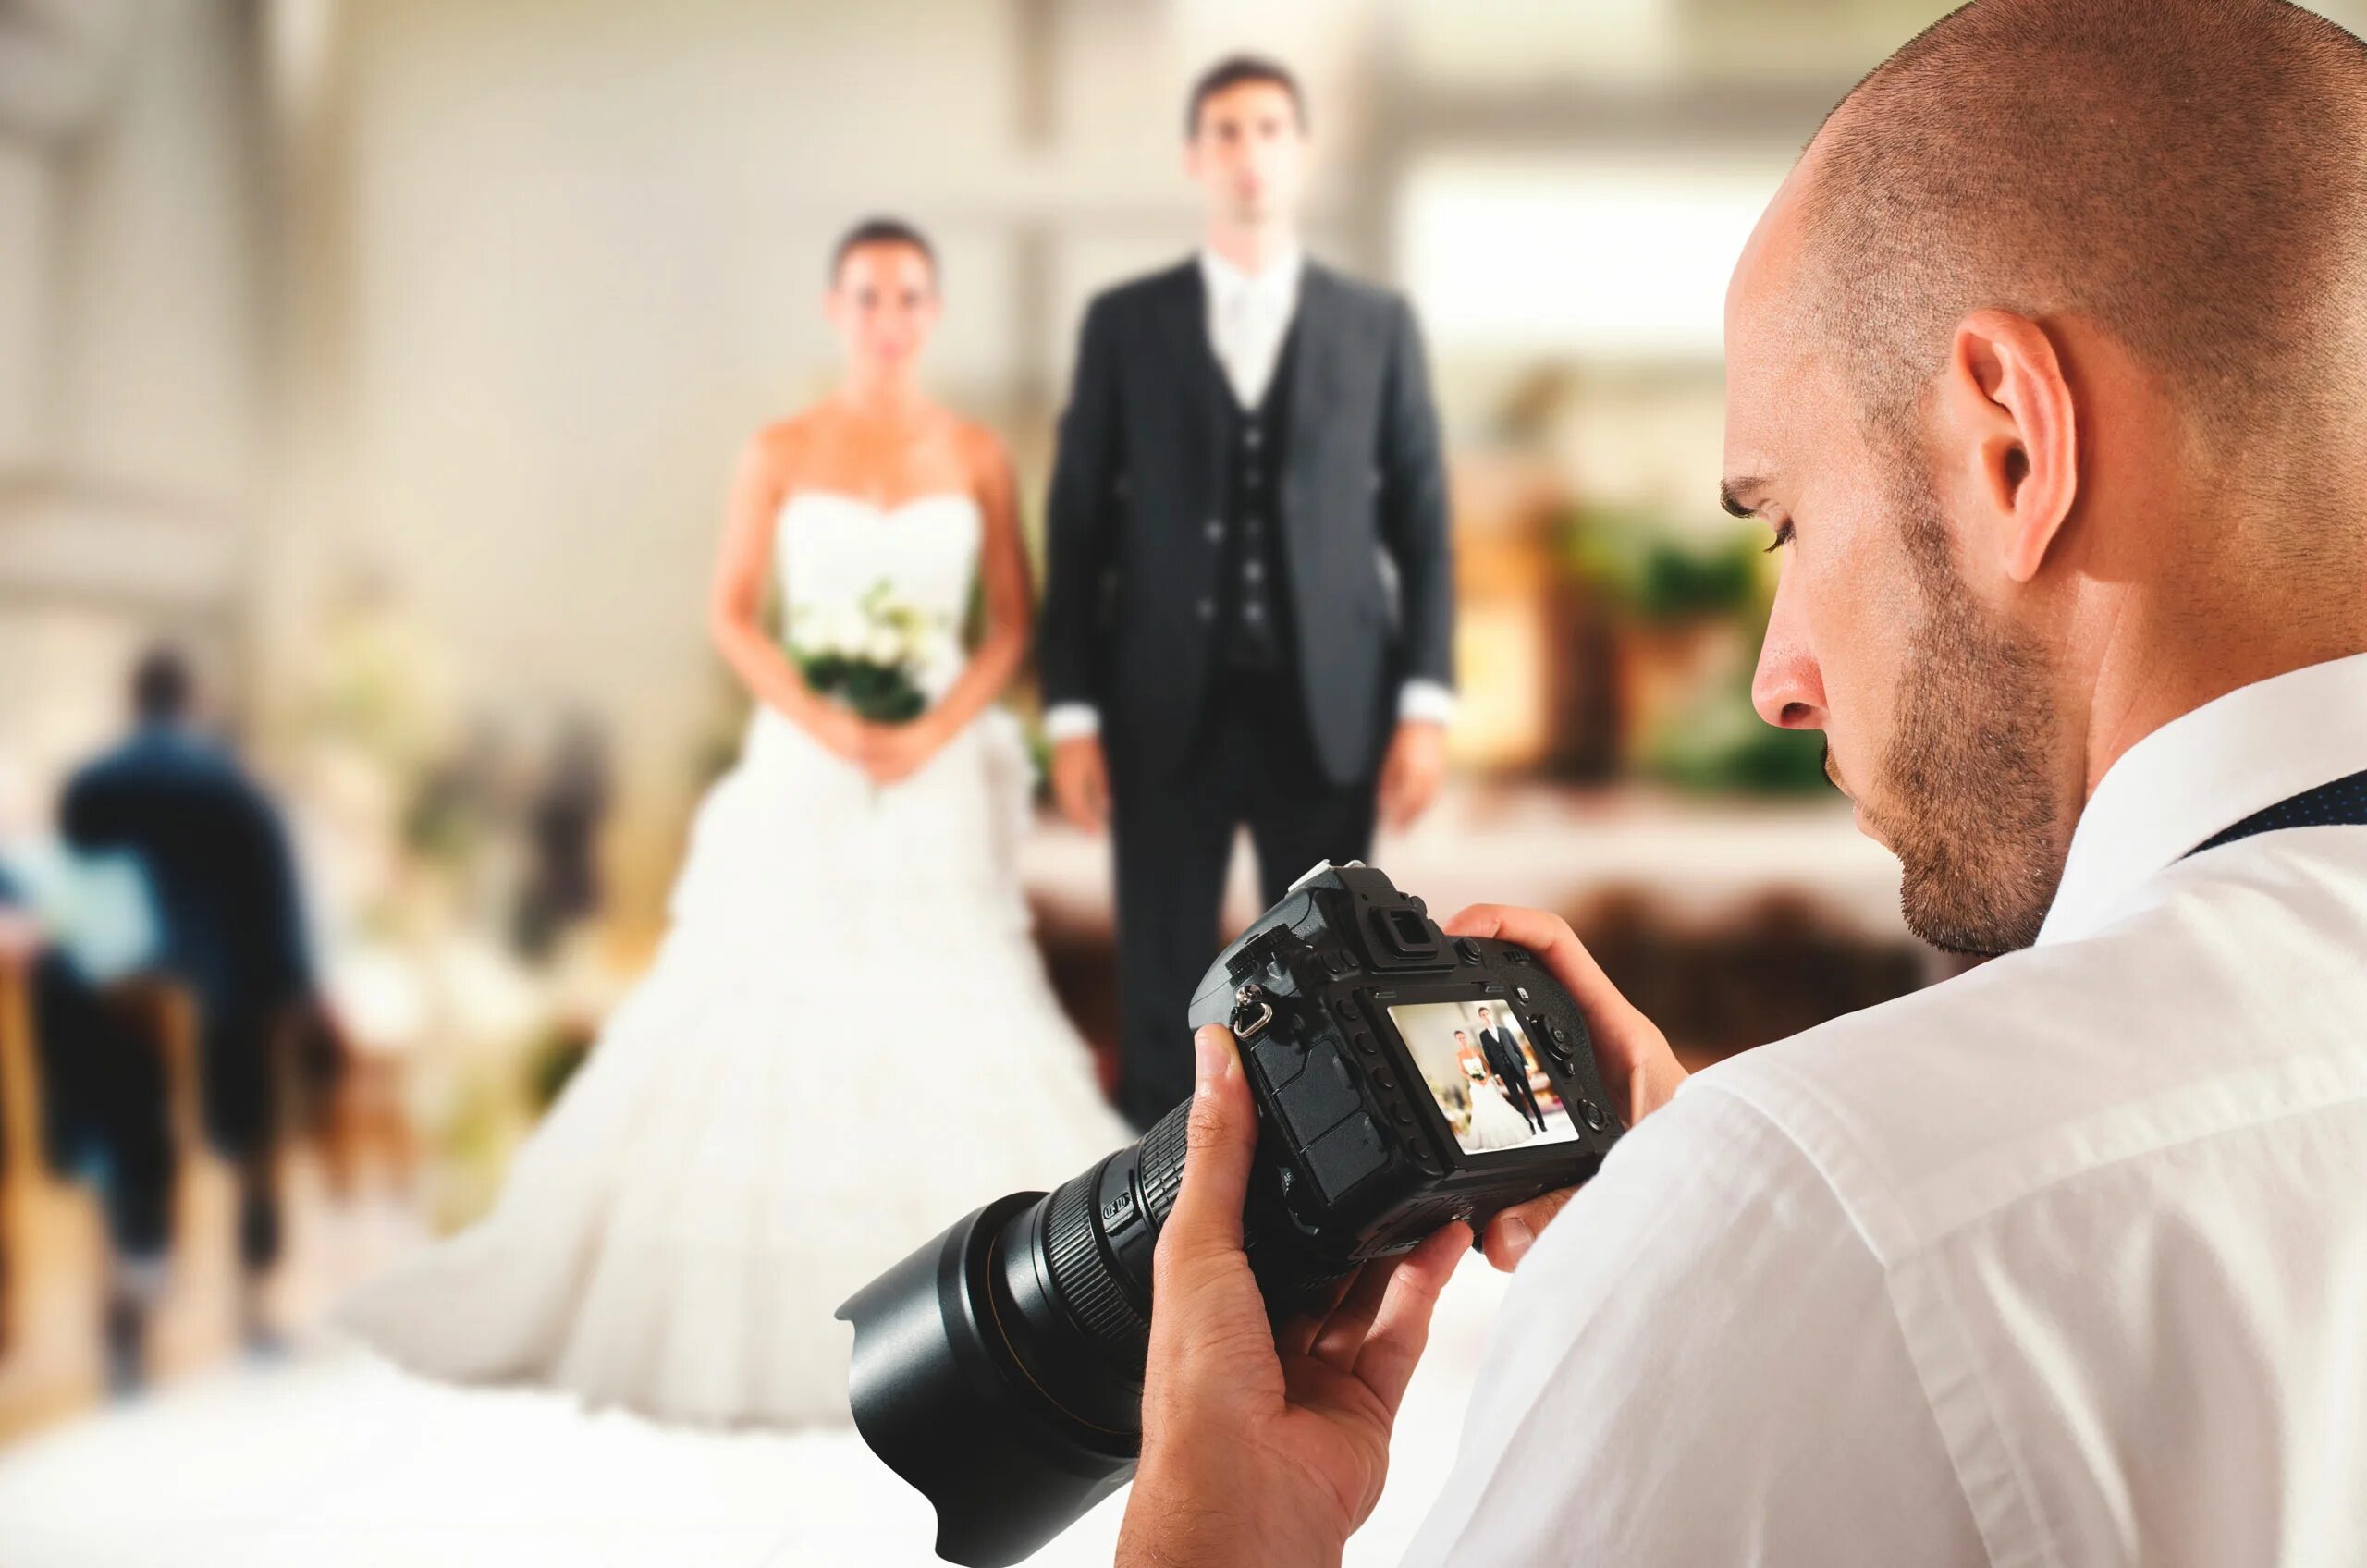 Съемка фотографа. Фотограф на свадьбу. Фотограф и видеооператор на свадьбу. Профессиональный фотограф на свадьбе. Фотограф и невеста.